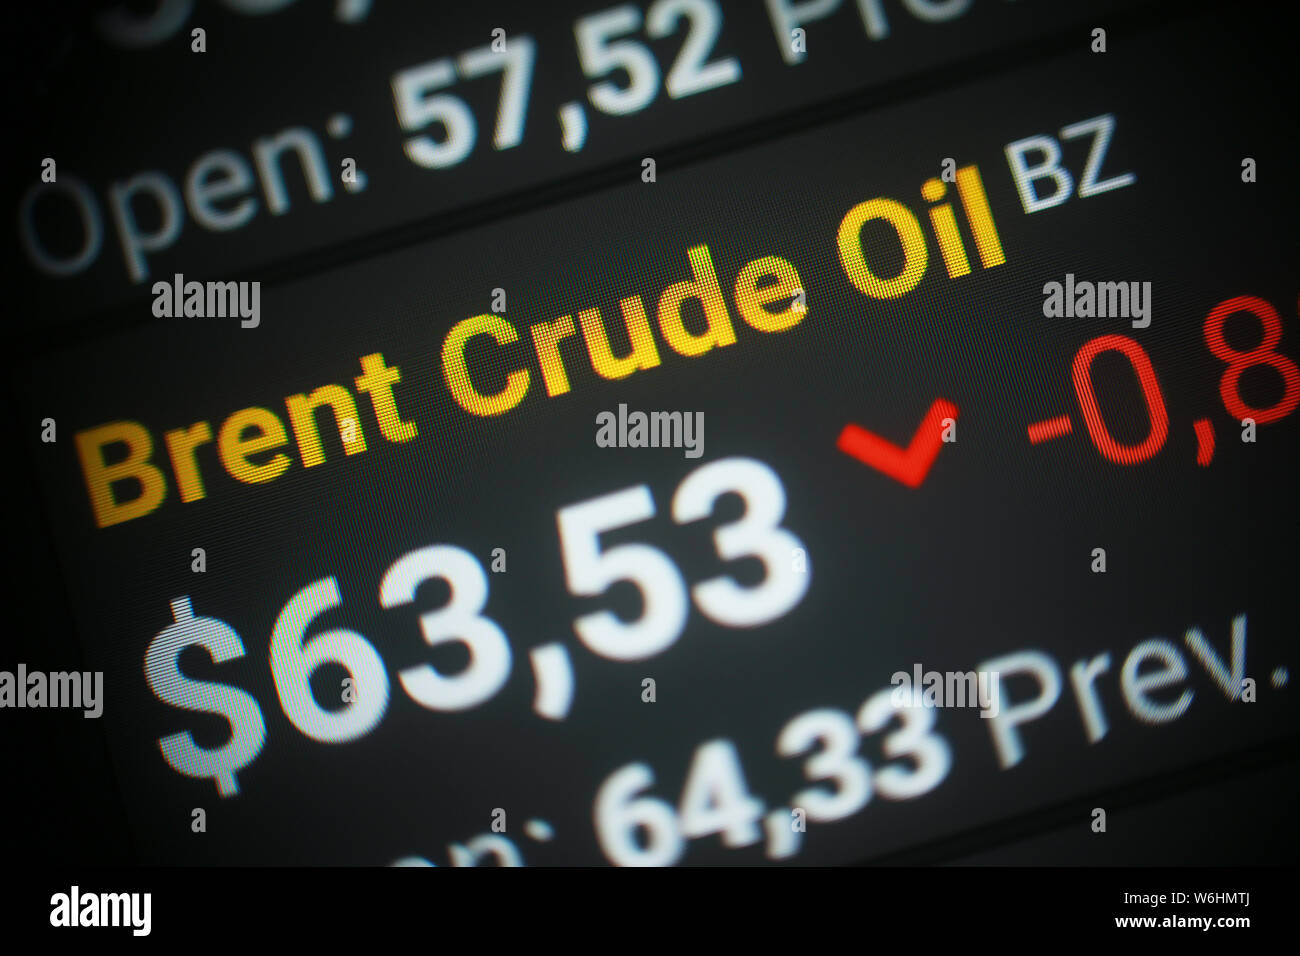 Brent Crude Oil (BZ) stock exchange indicator on computer screen Stock Photo